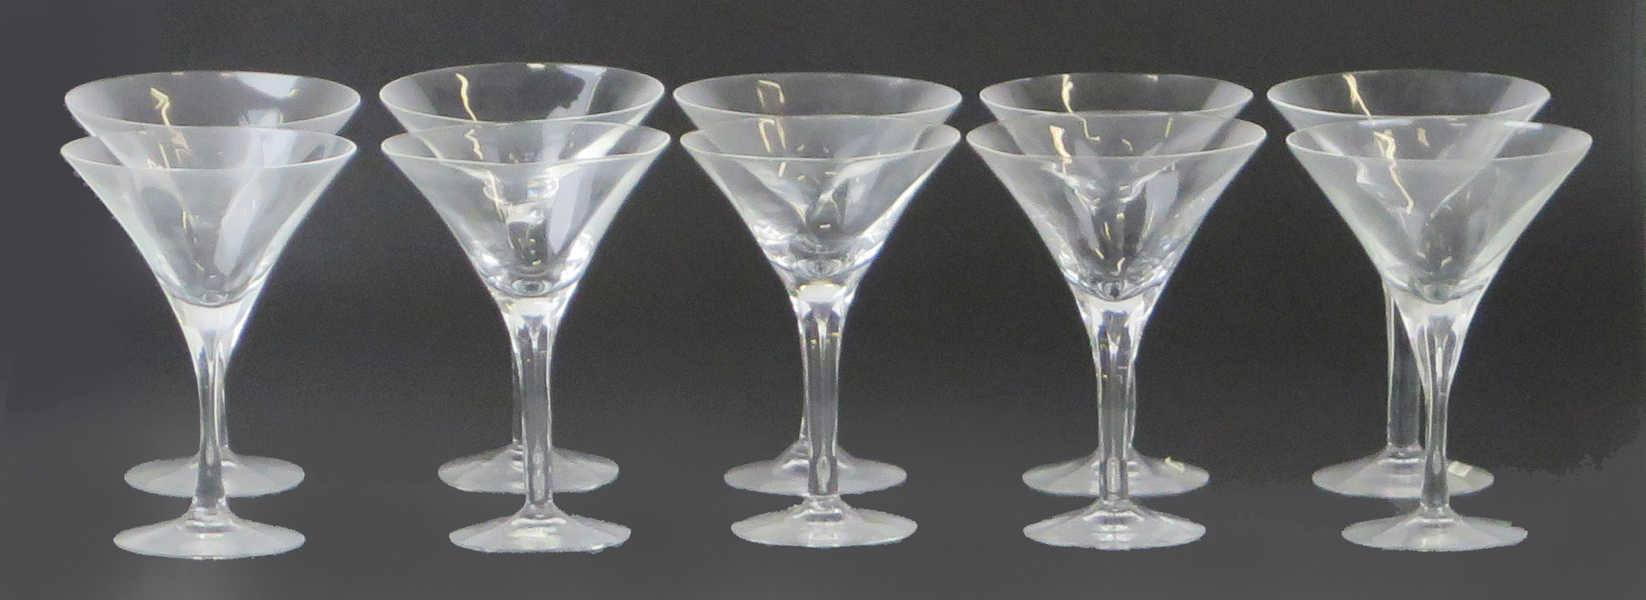 Vallien, Bertil för Kosta Boda, martiniglas, 10 st, Chateau, design 1981, h 15 cm_35675a_8dc16843ebd55a7_lg.jpeg